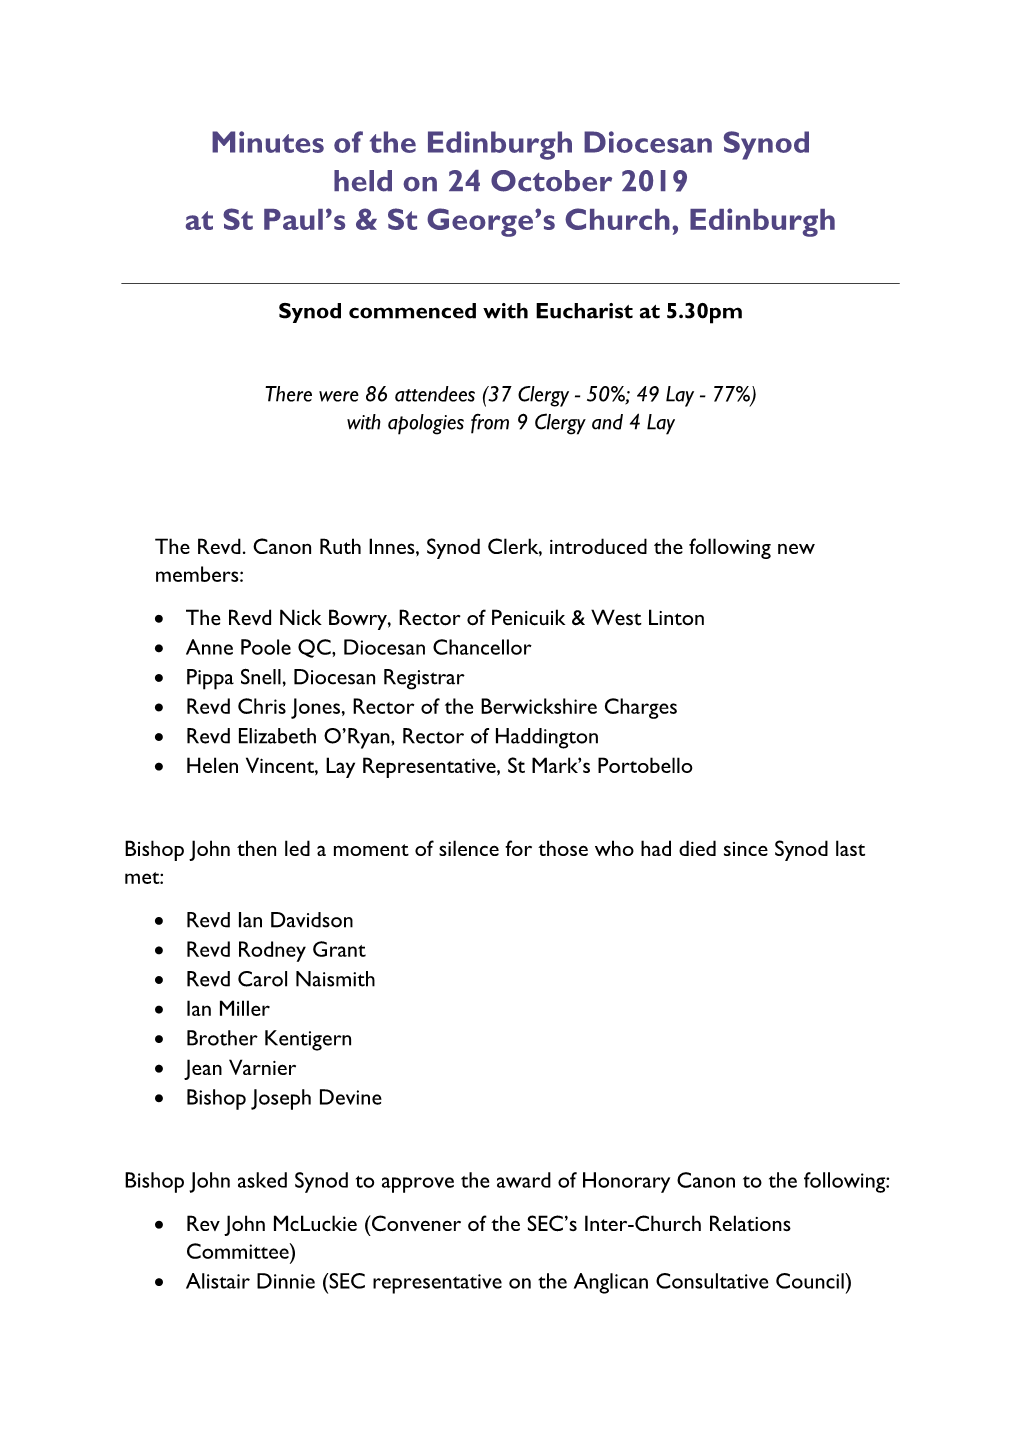 Minutes of the Edinburgh Diocesan Synod Held on 24 October 2019 at St Paul’S & St George’S Church, Edinburgh